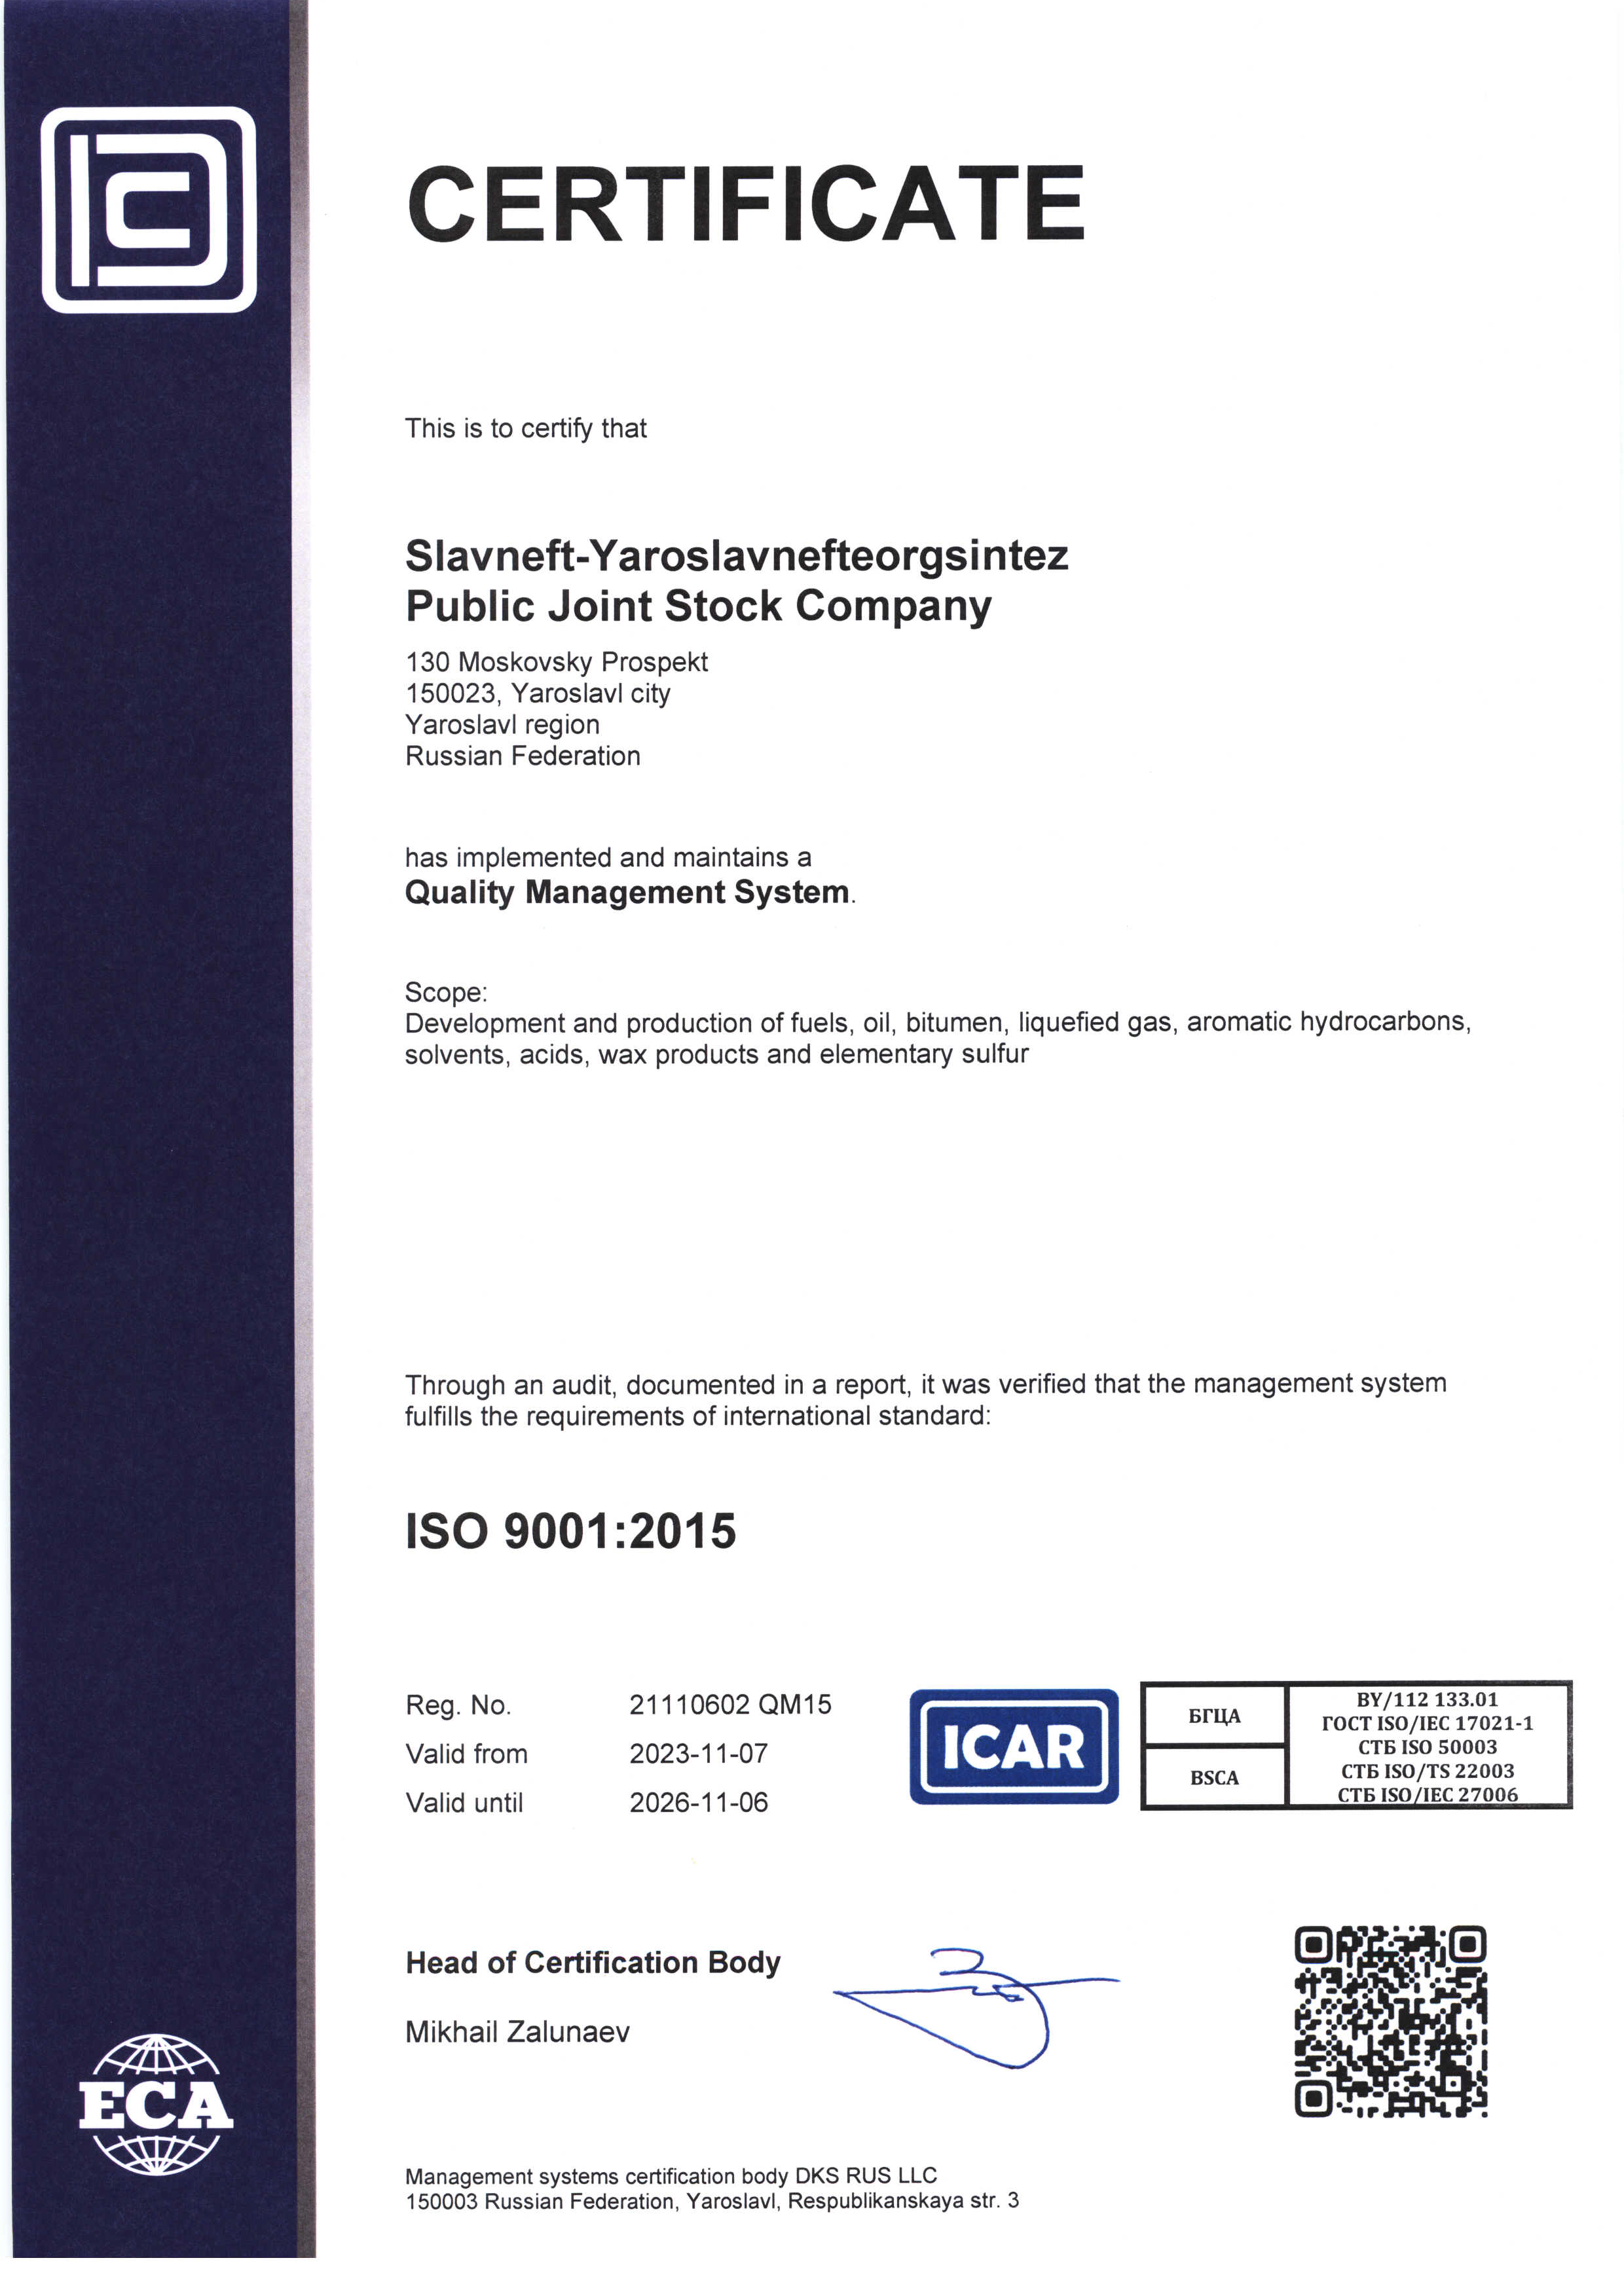 Slavneft-YANOS OAO Certificate ISO 9001-2015